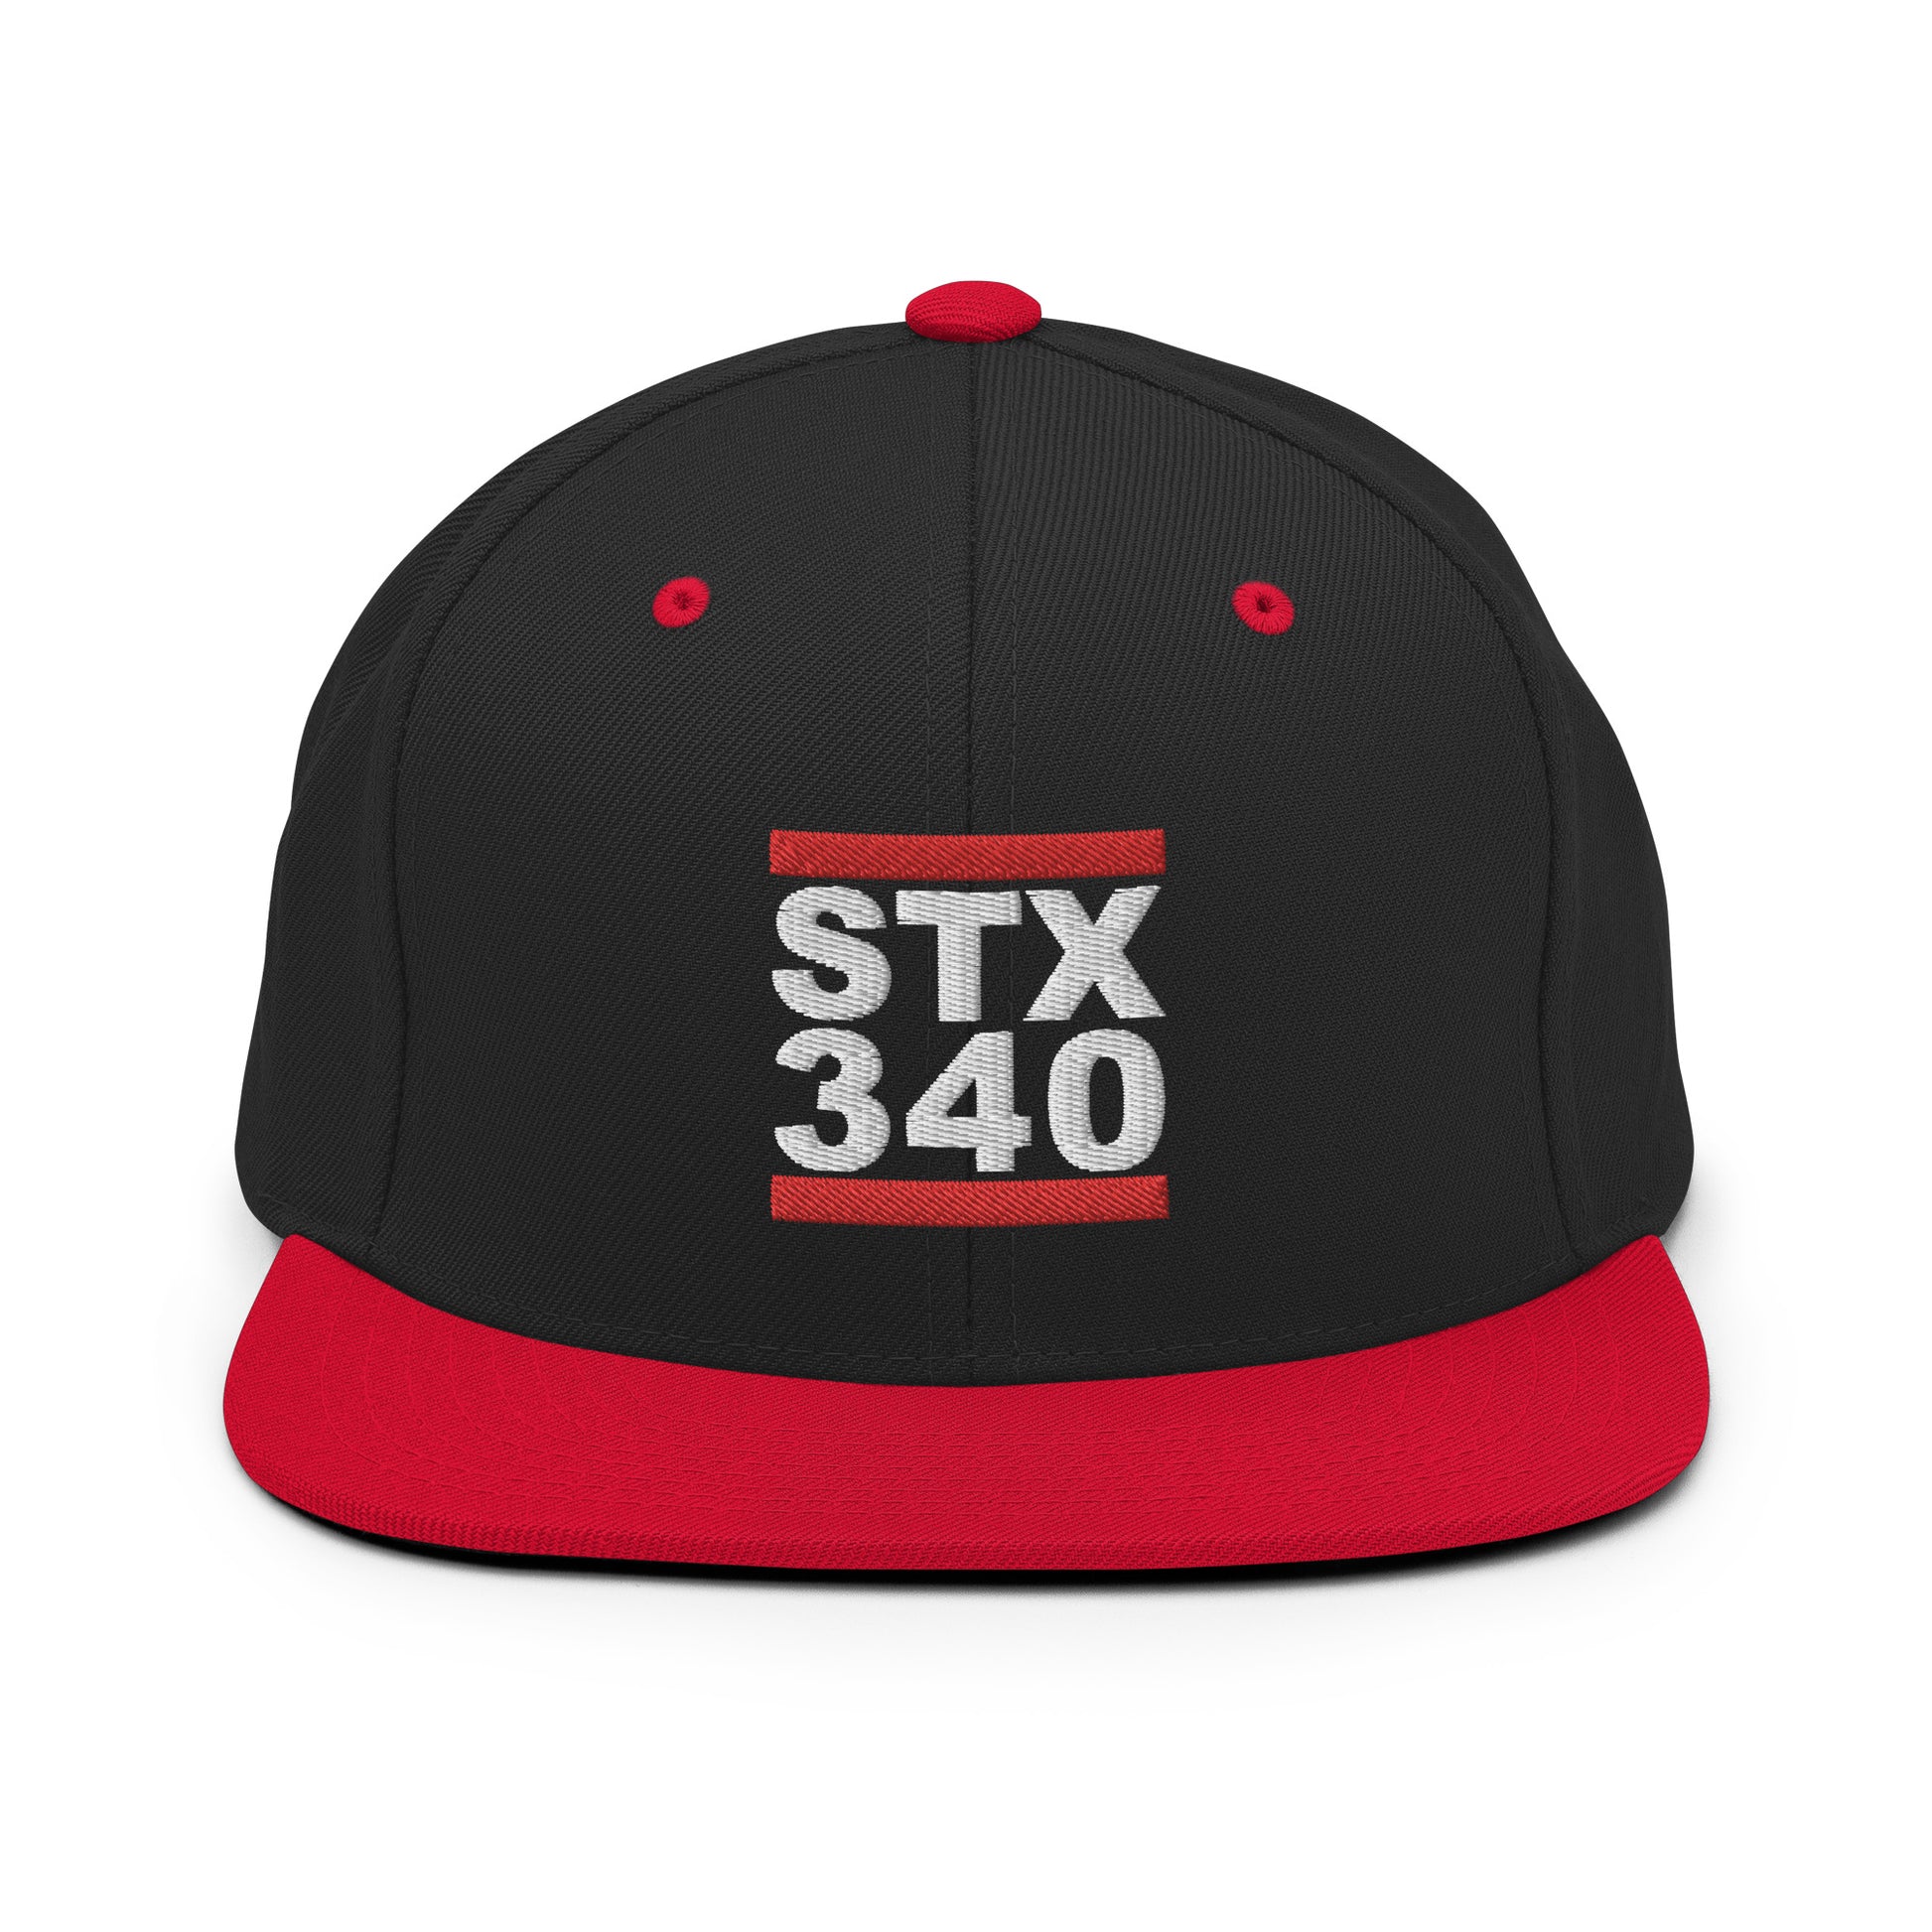 Stx 340 Snapback Hat | Phade Fashion Virgin Islands